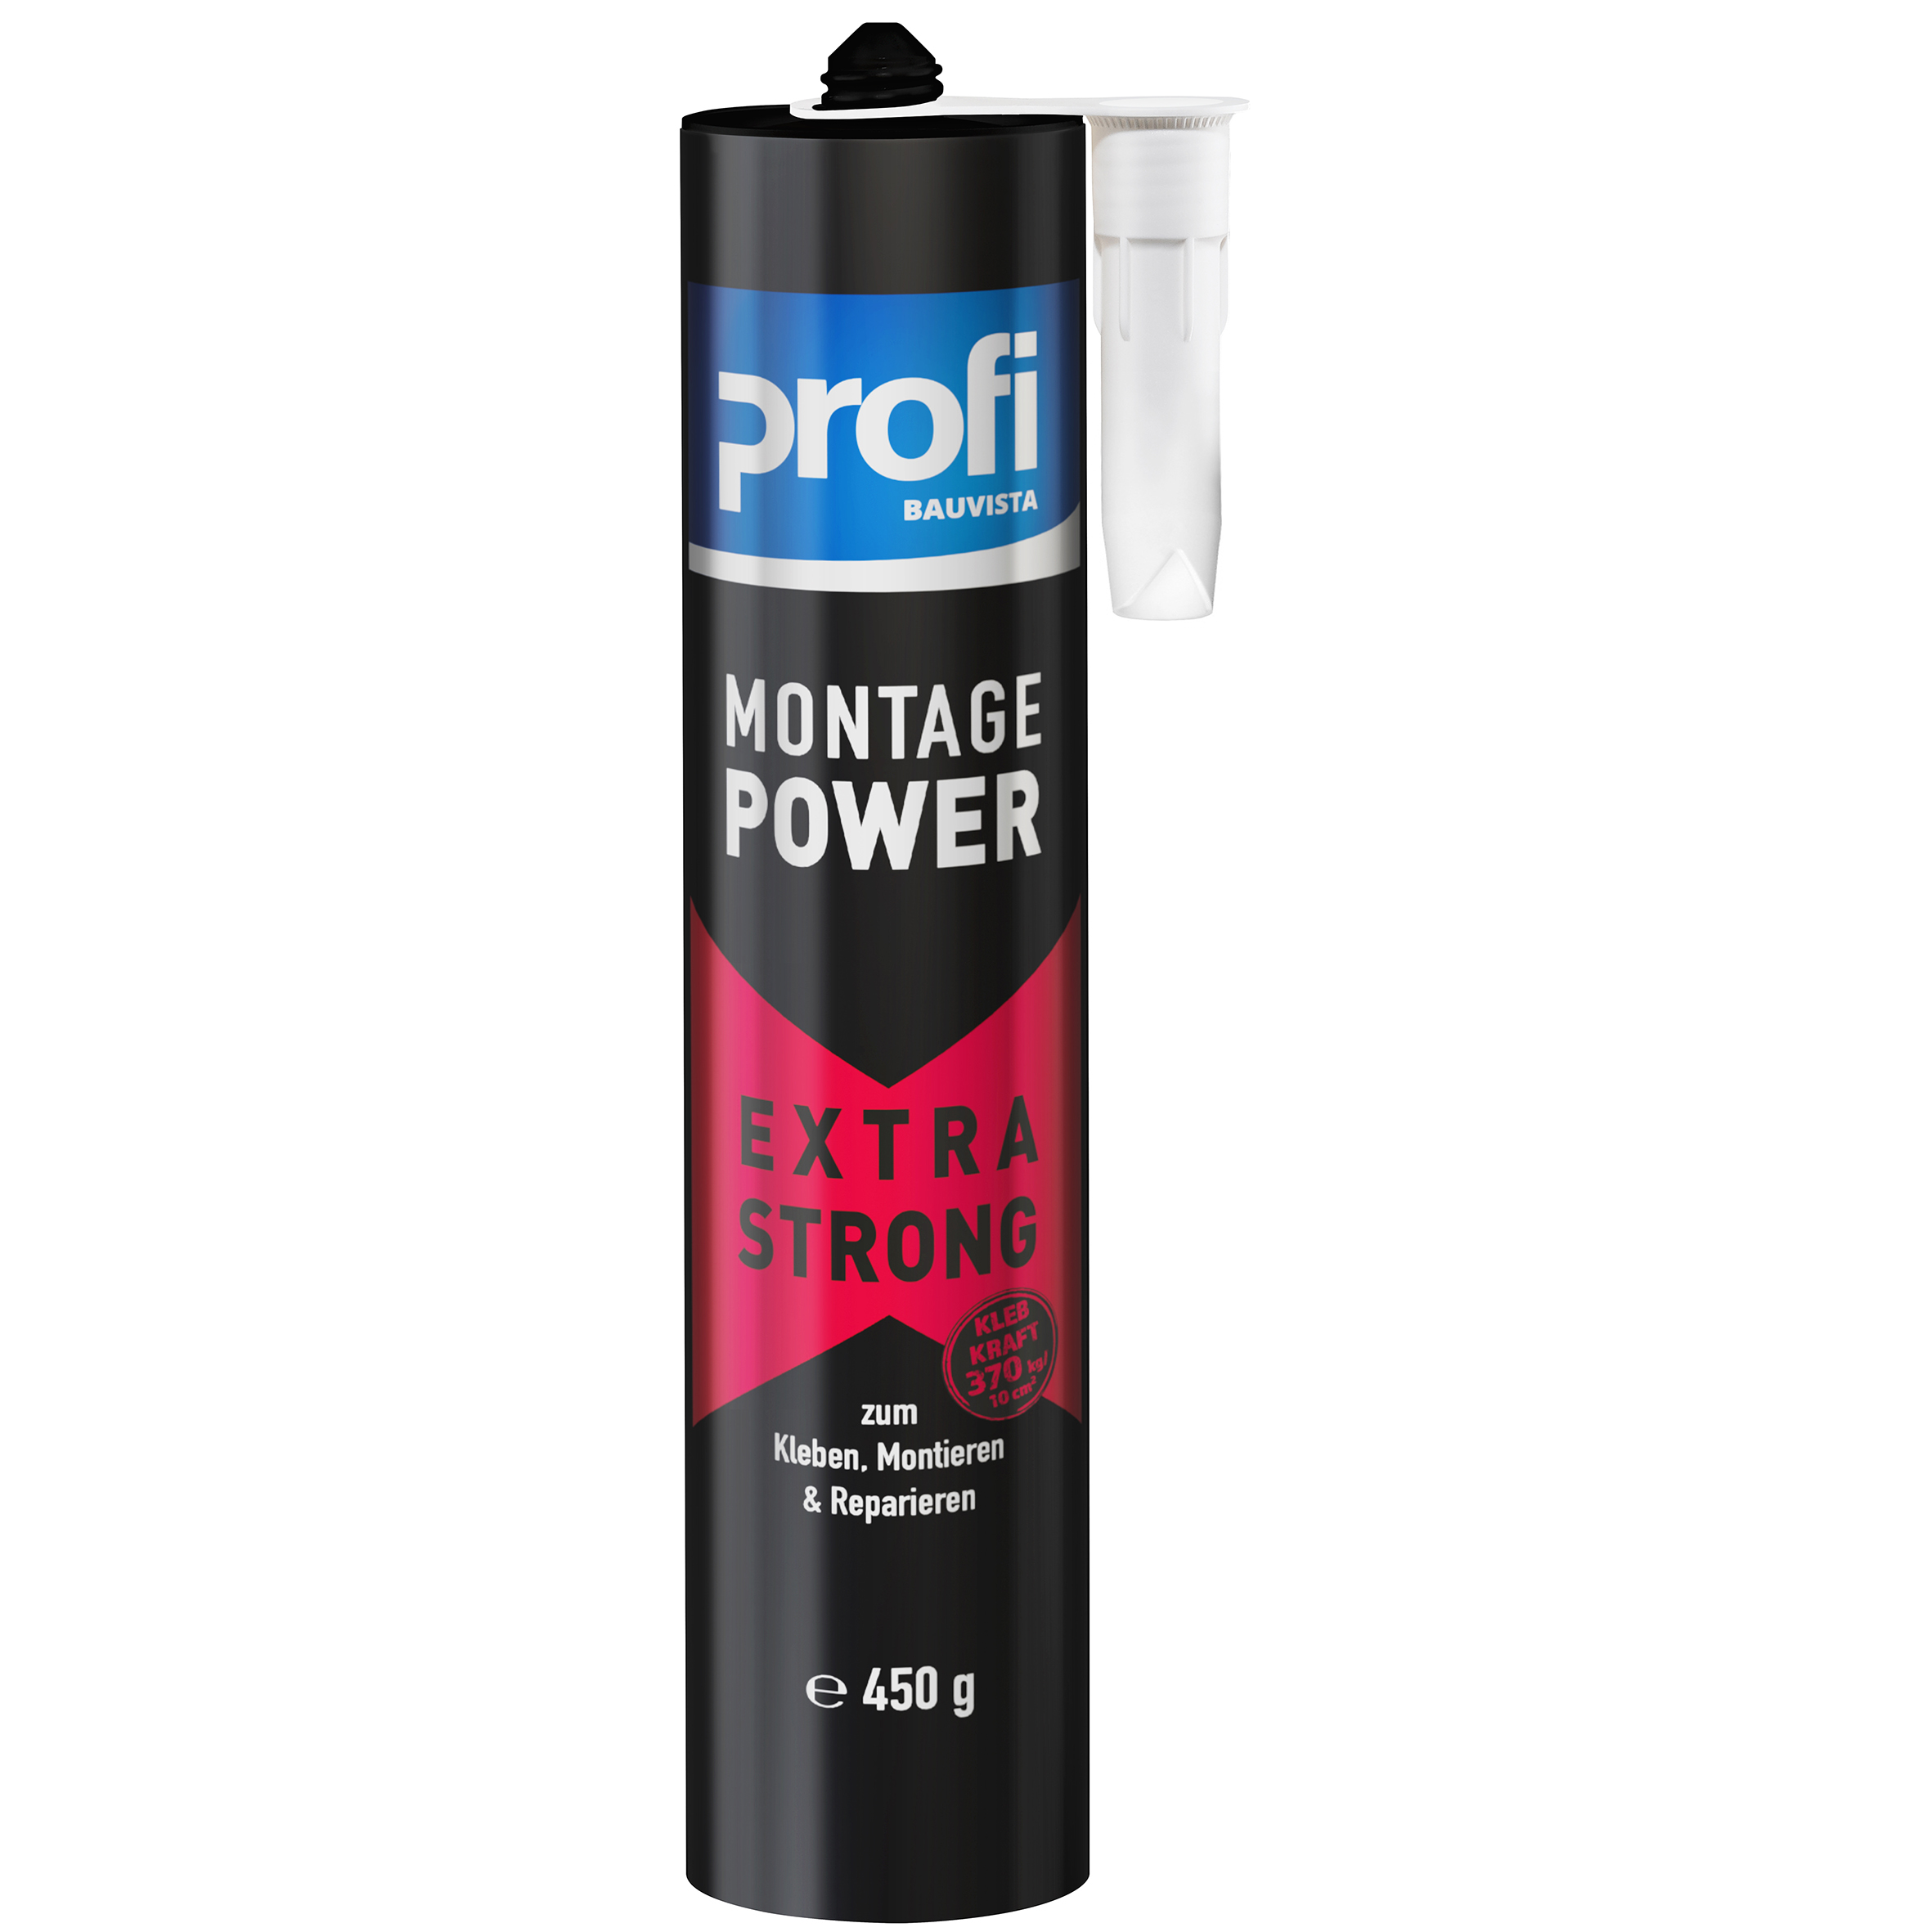 PROFI Montage Power EXTRA STRONG 450 g, Weiß